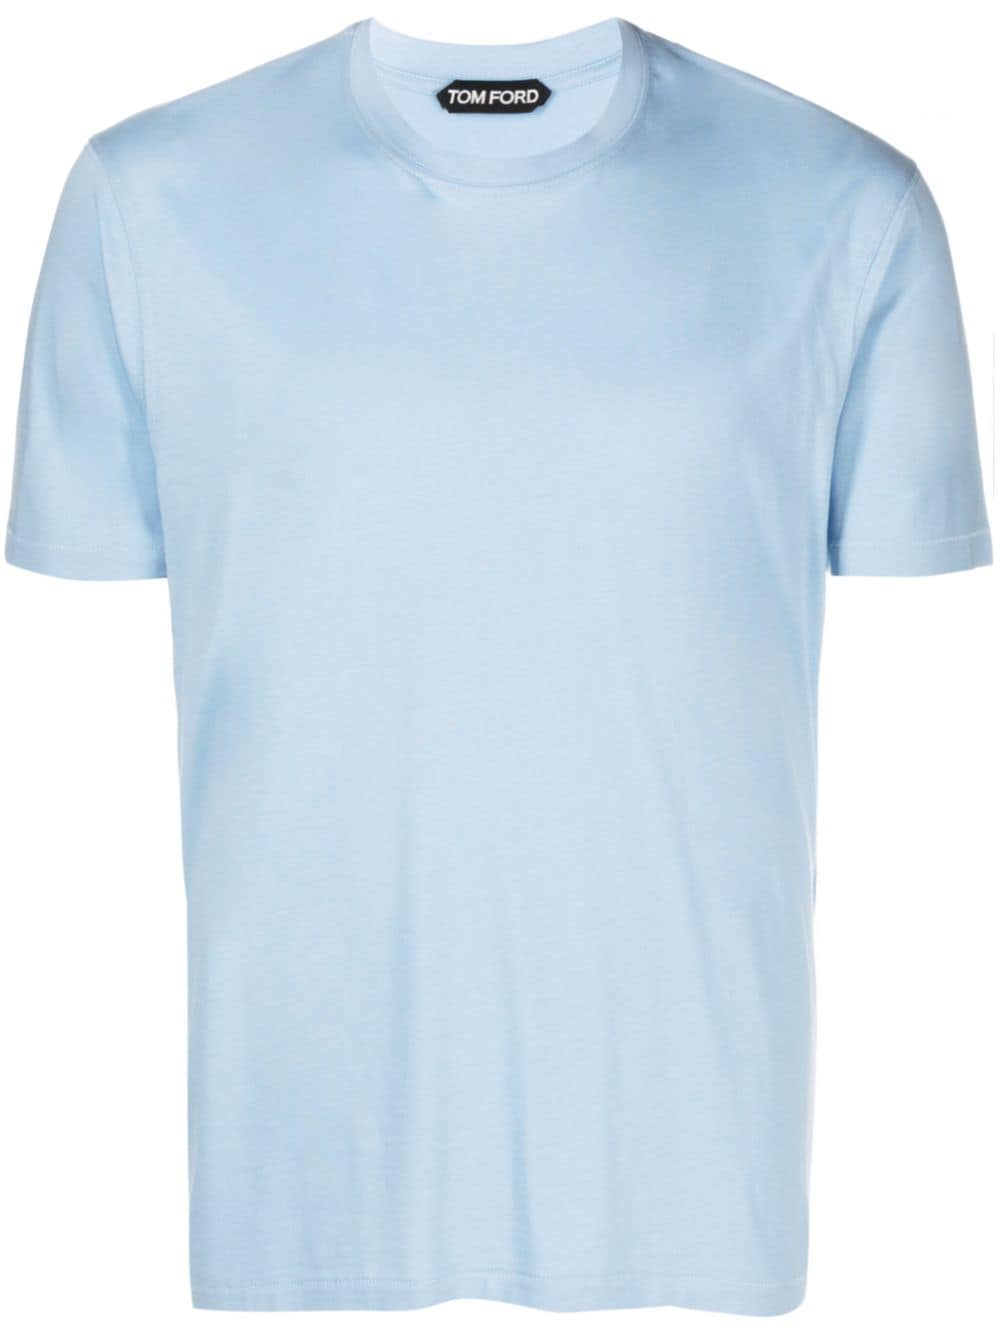 TOM FORD mélange-effect jersey T-shirt - Blue von TOM FORD